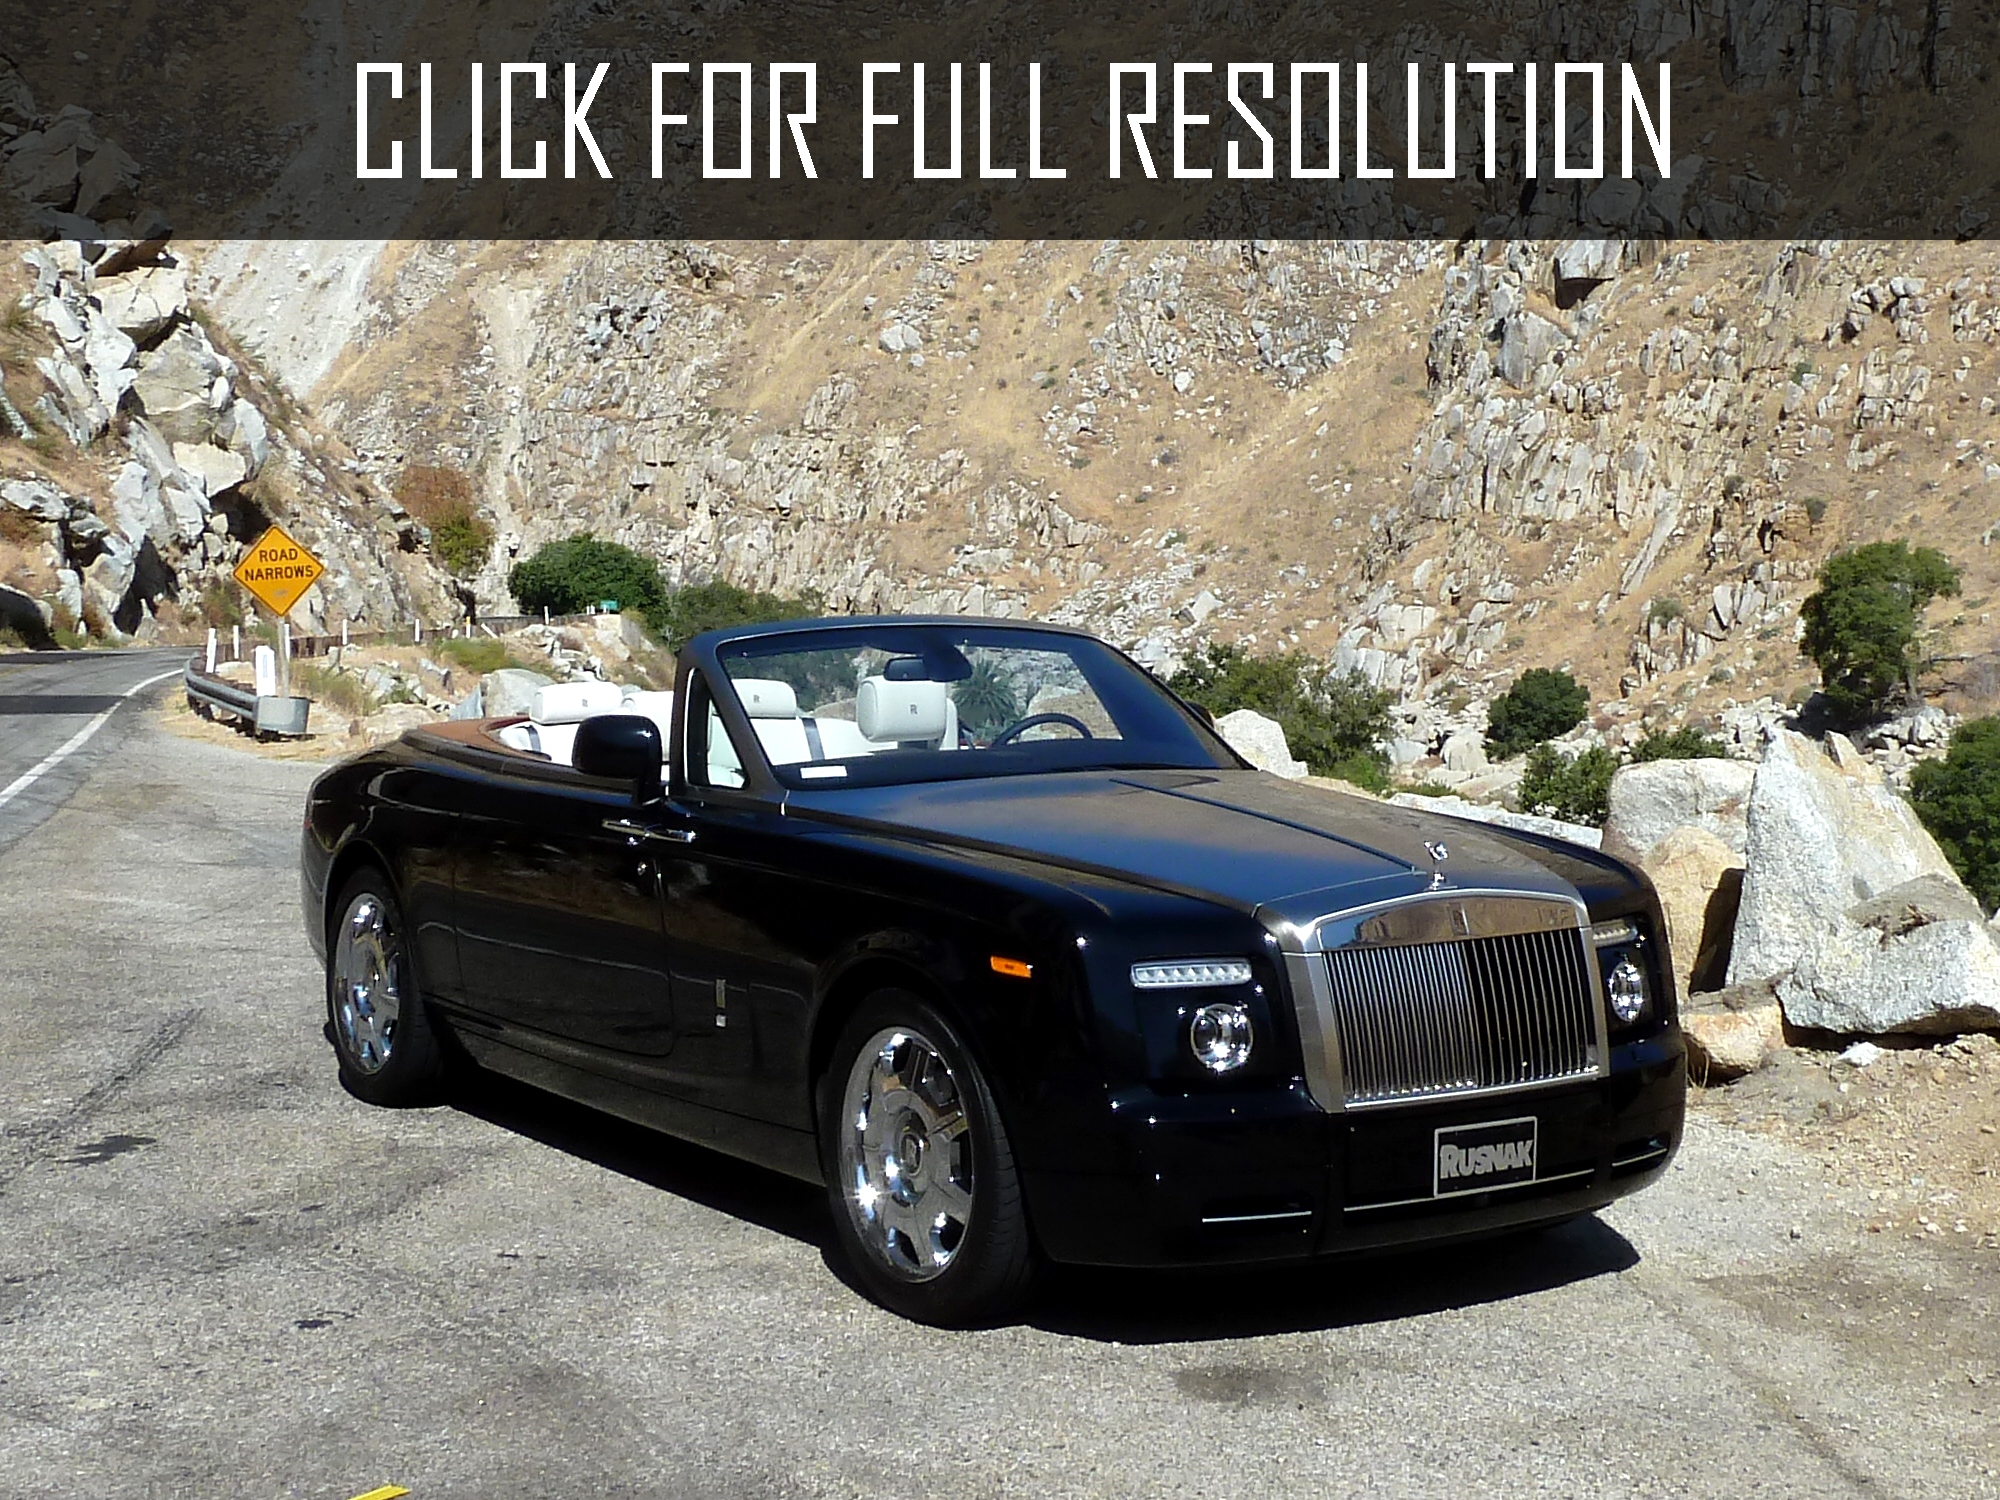 2011 Rolls Royce Phantom Coupe